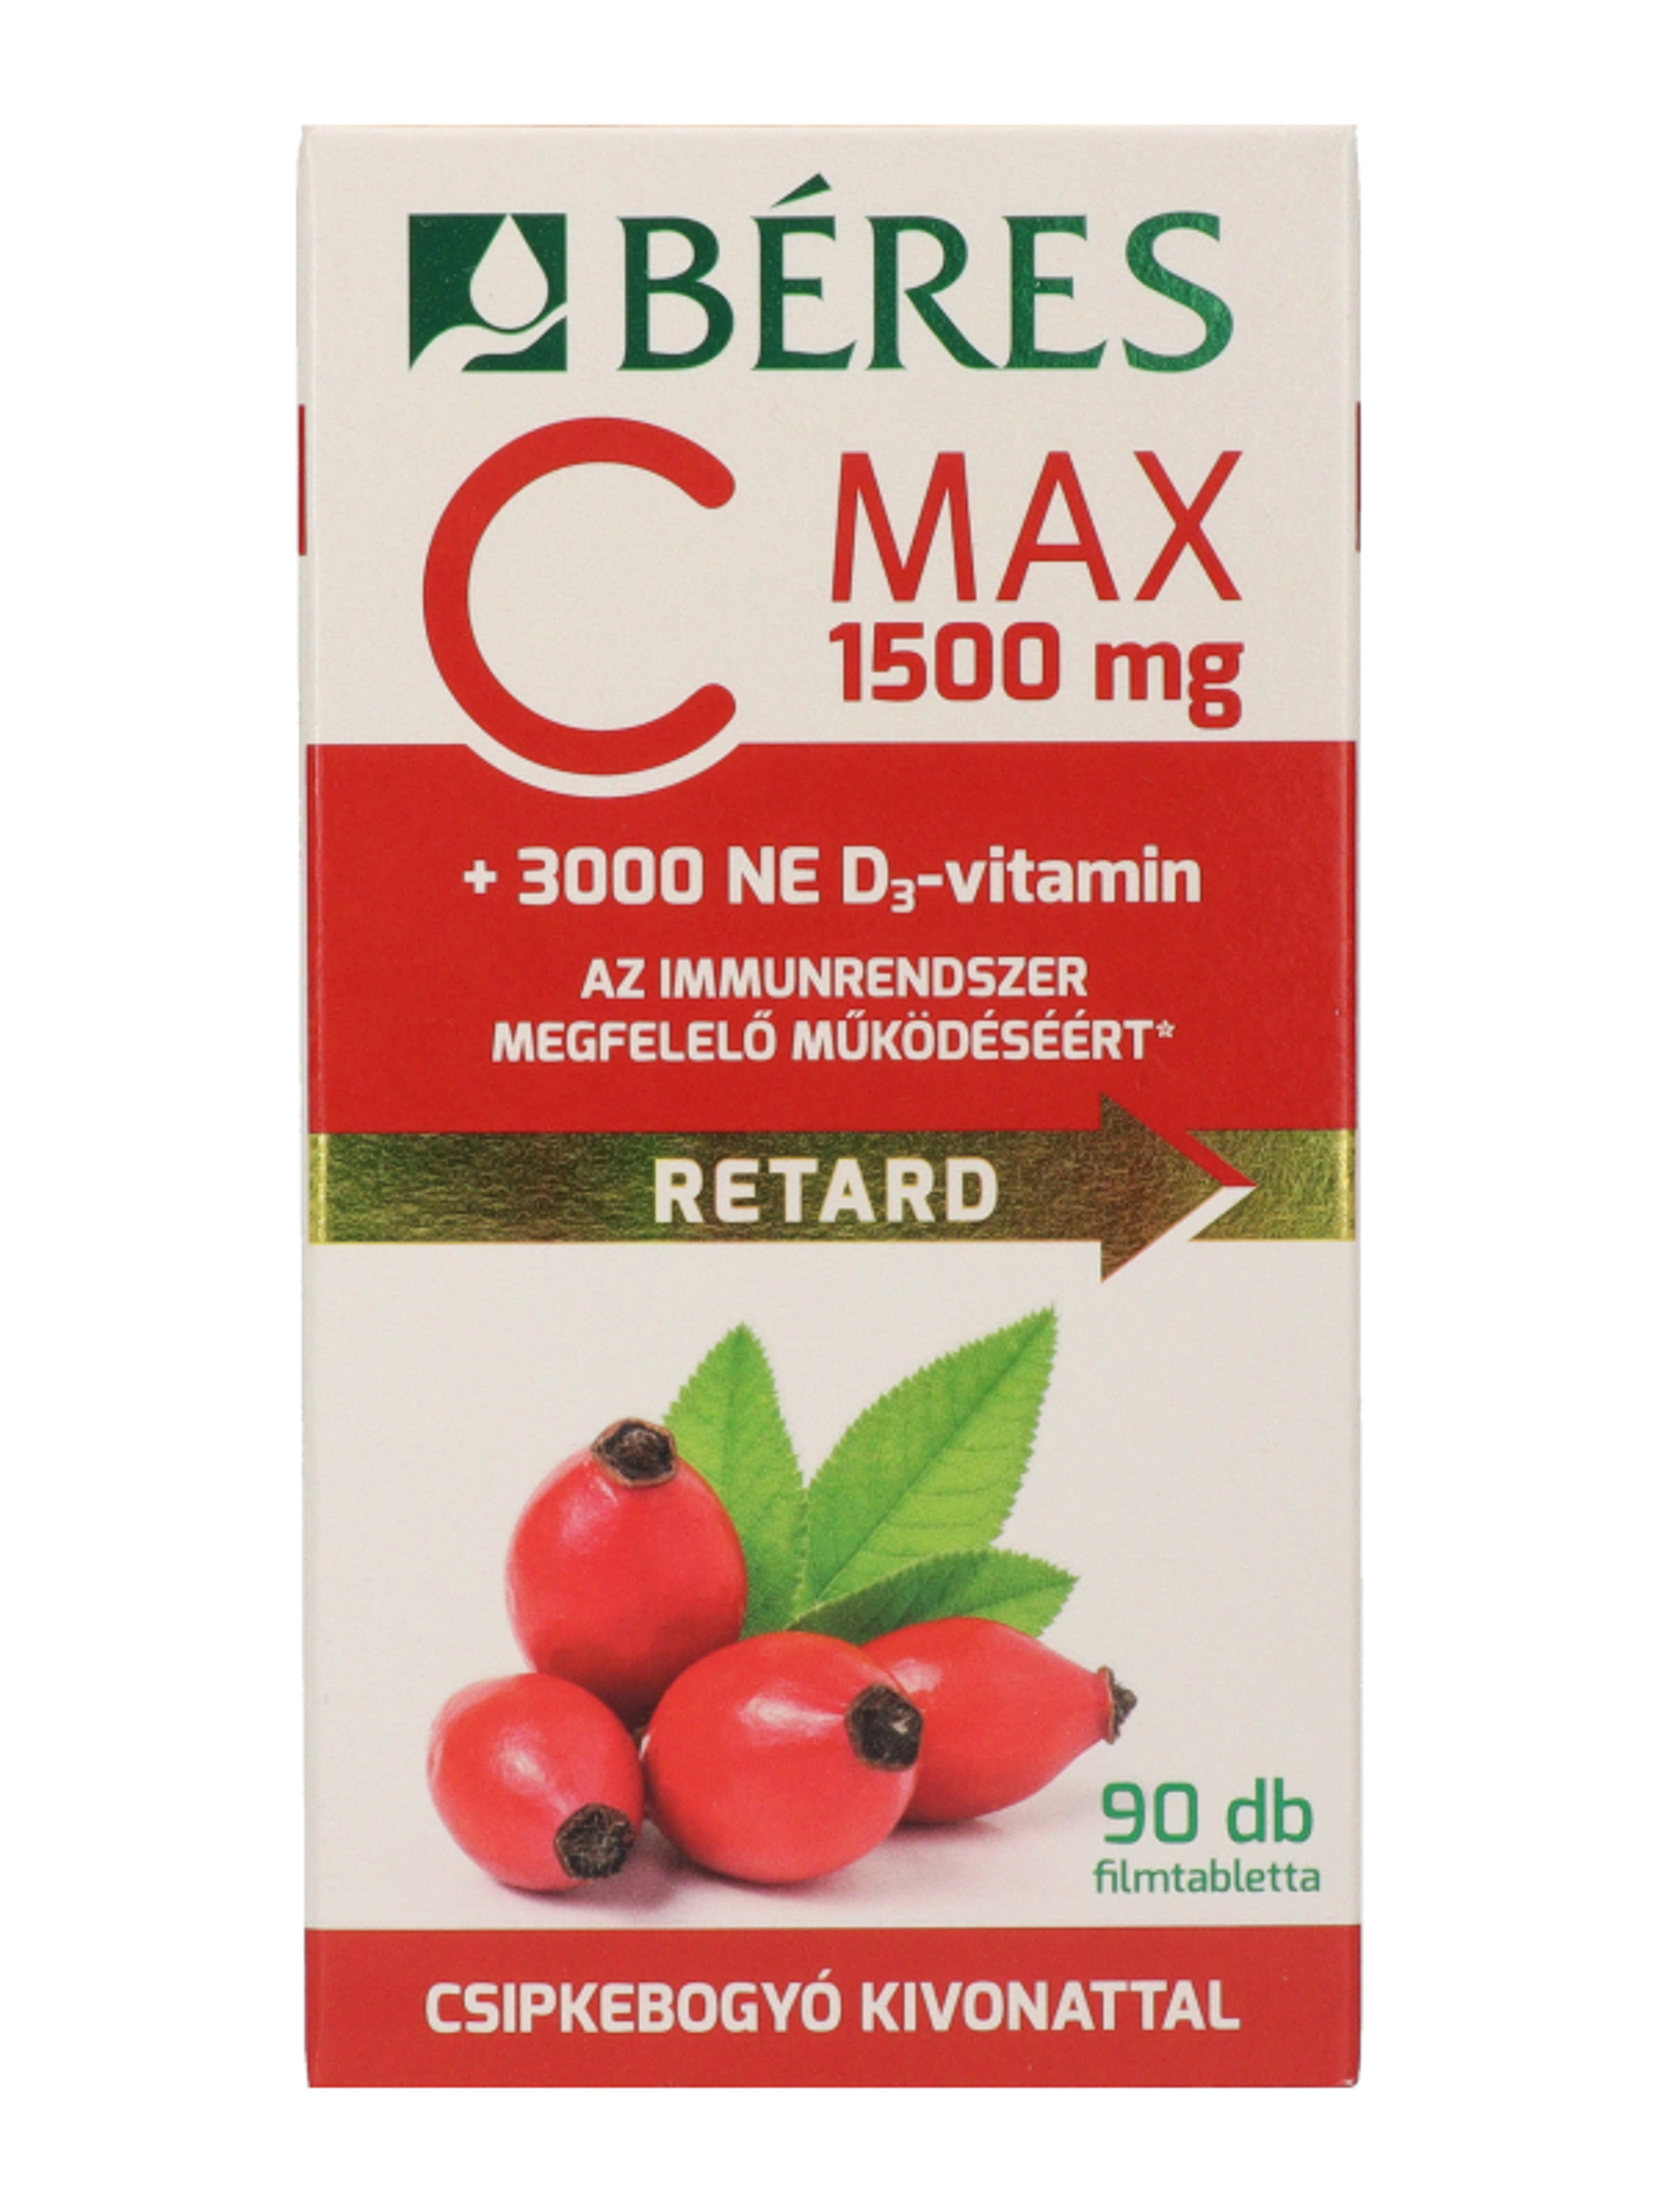 Béres C MAX 1500 mg RETARD csipkebogyó kivonattal + 3000 NE D₃-vitamin filmtabletta - 90 db-3